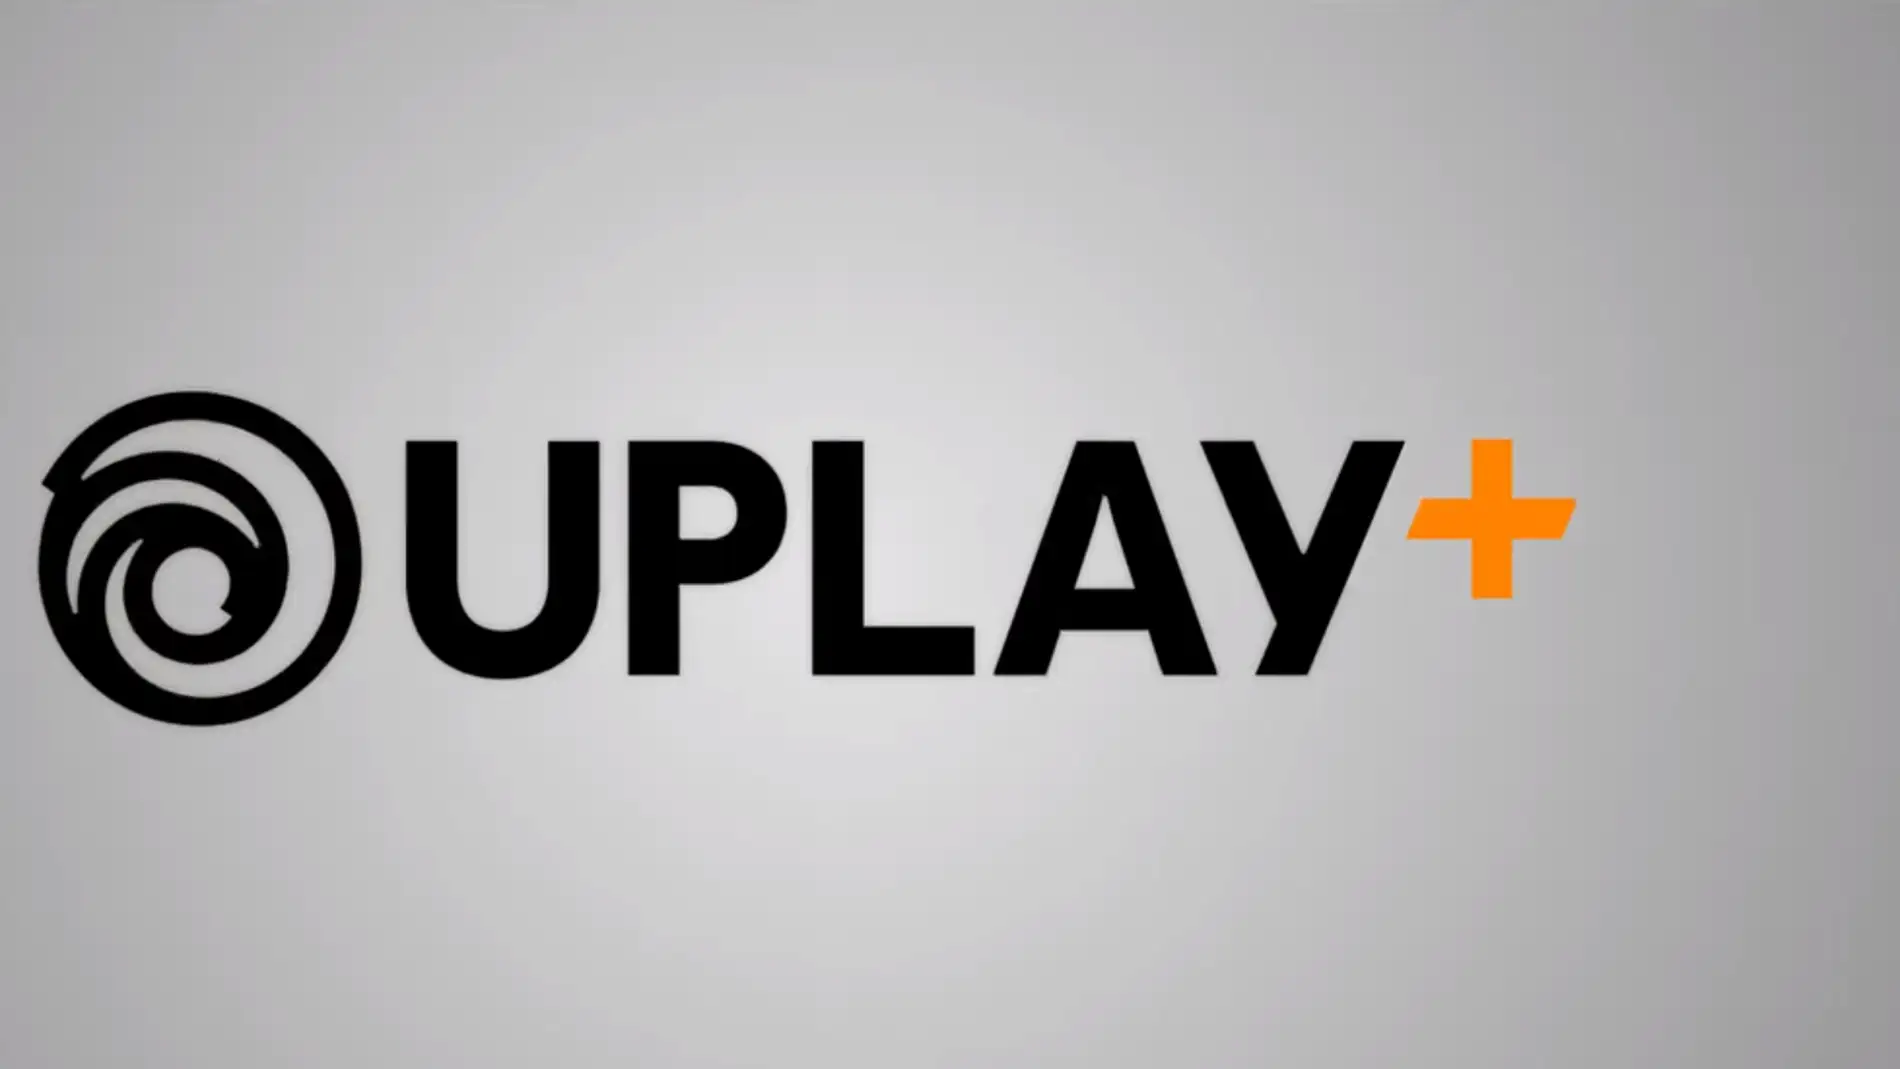 Uplay+